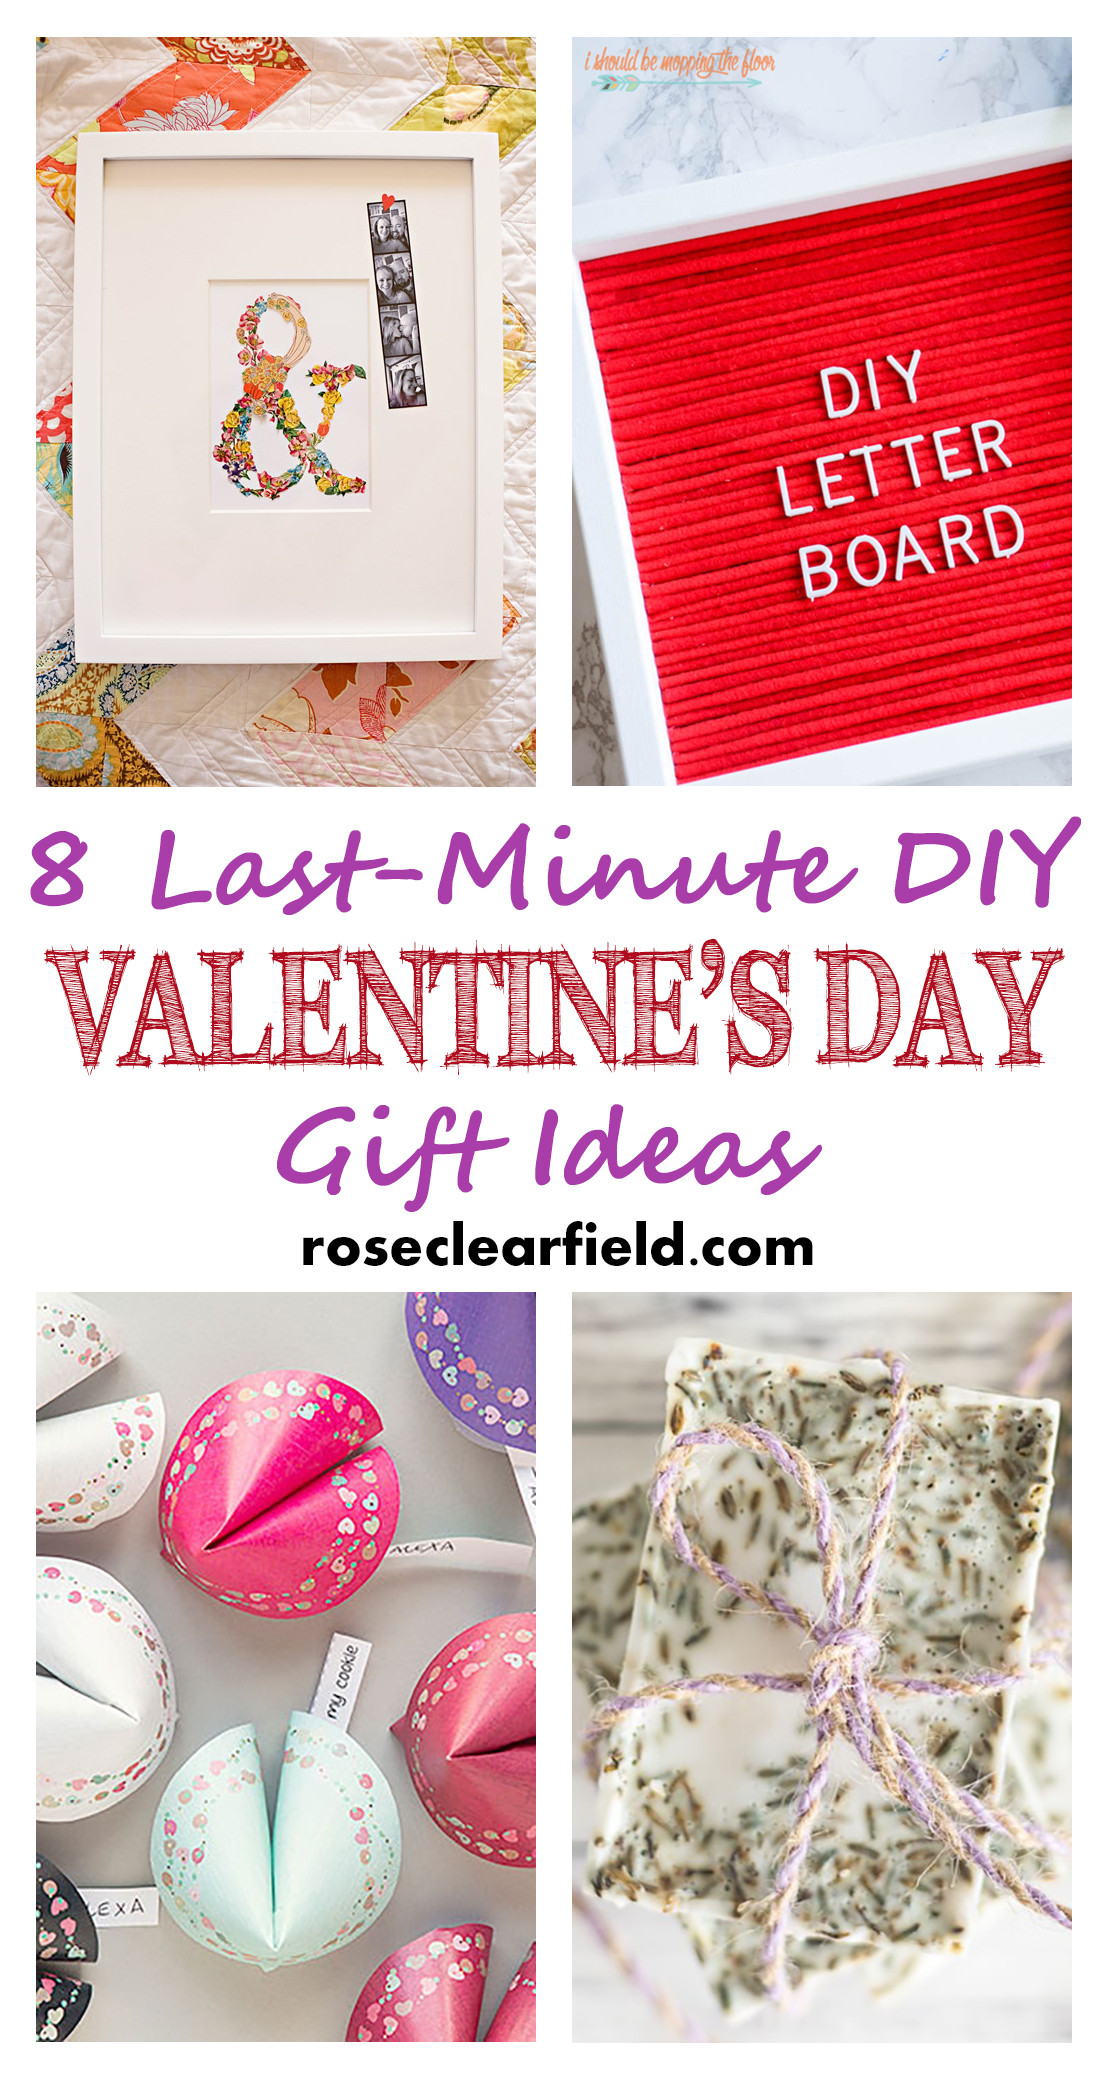 Valentines Day Handmade Gift Ideas
 Last Minute DIY Valentine s Day Gift Ideas • Rose Clearfield